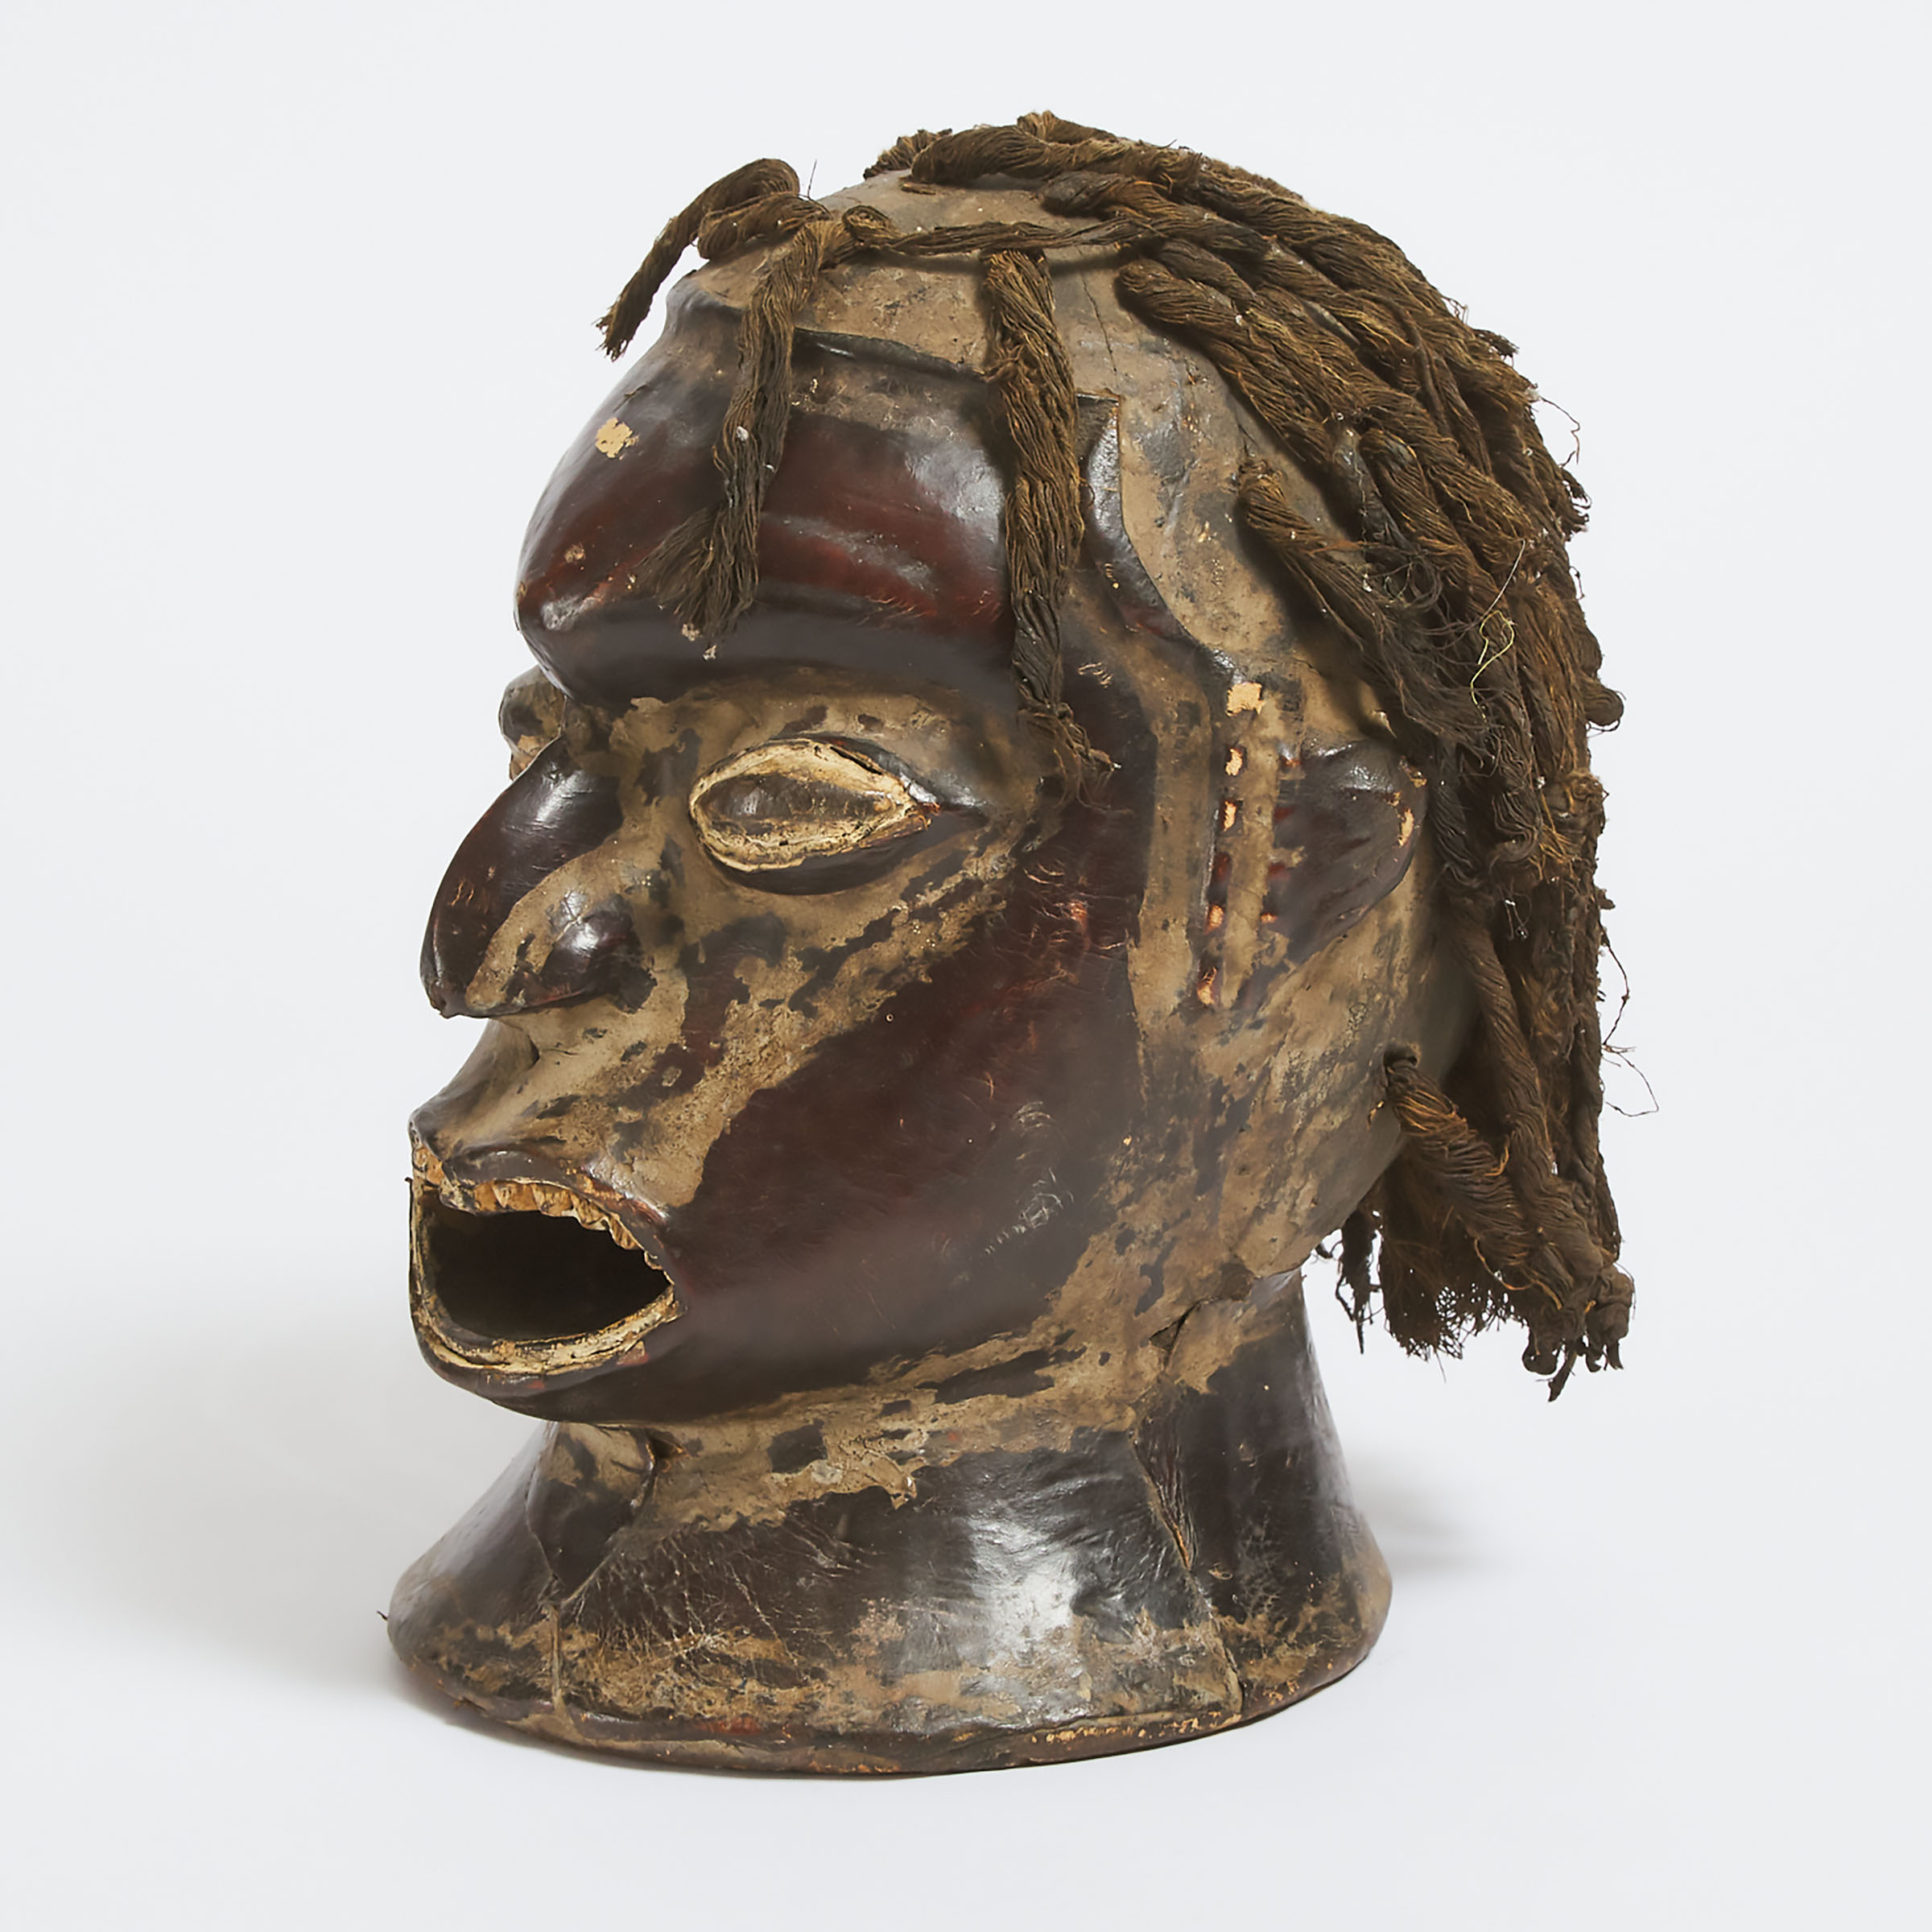 Ekoi Headdress, Nigeria/Cameroon, North Africa, early to mid 20th century